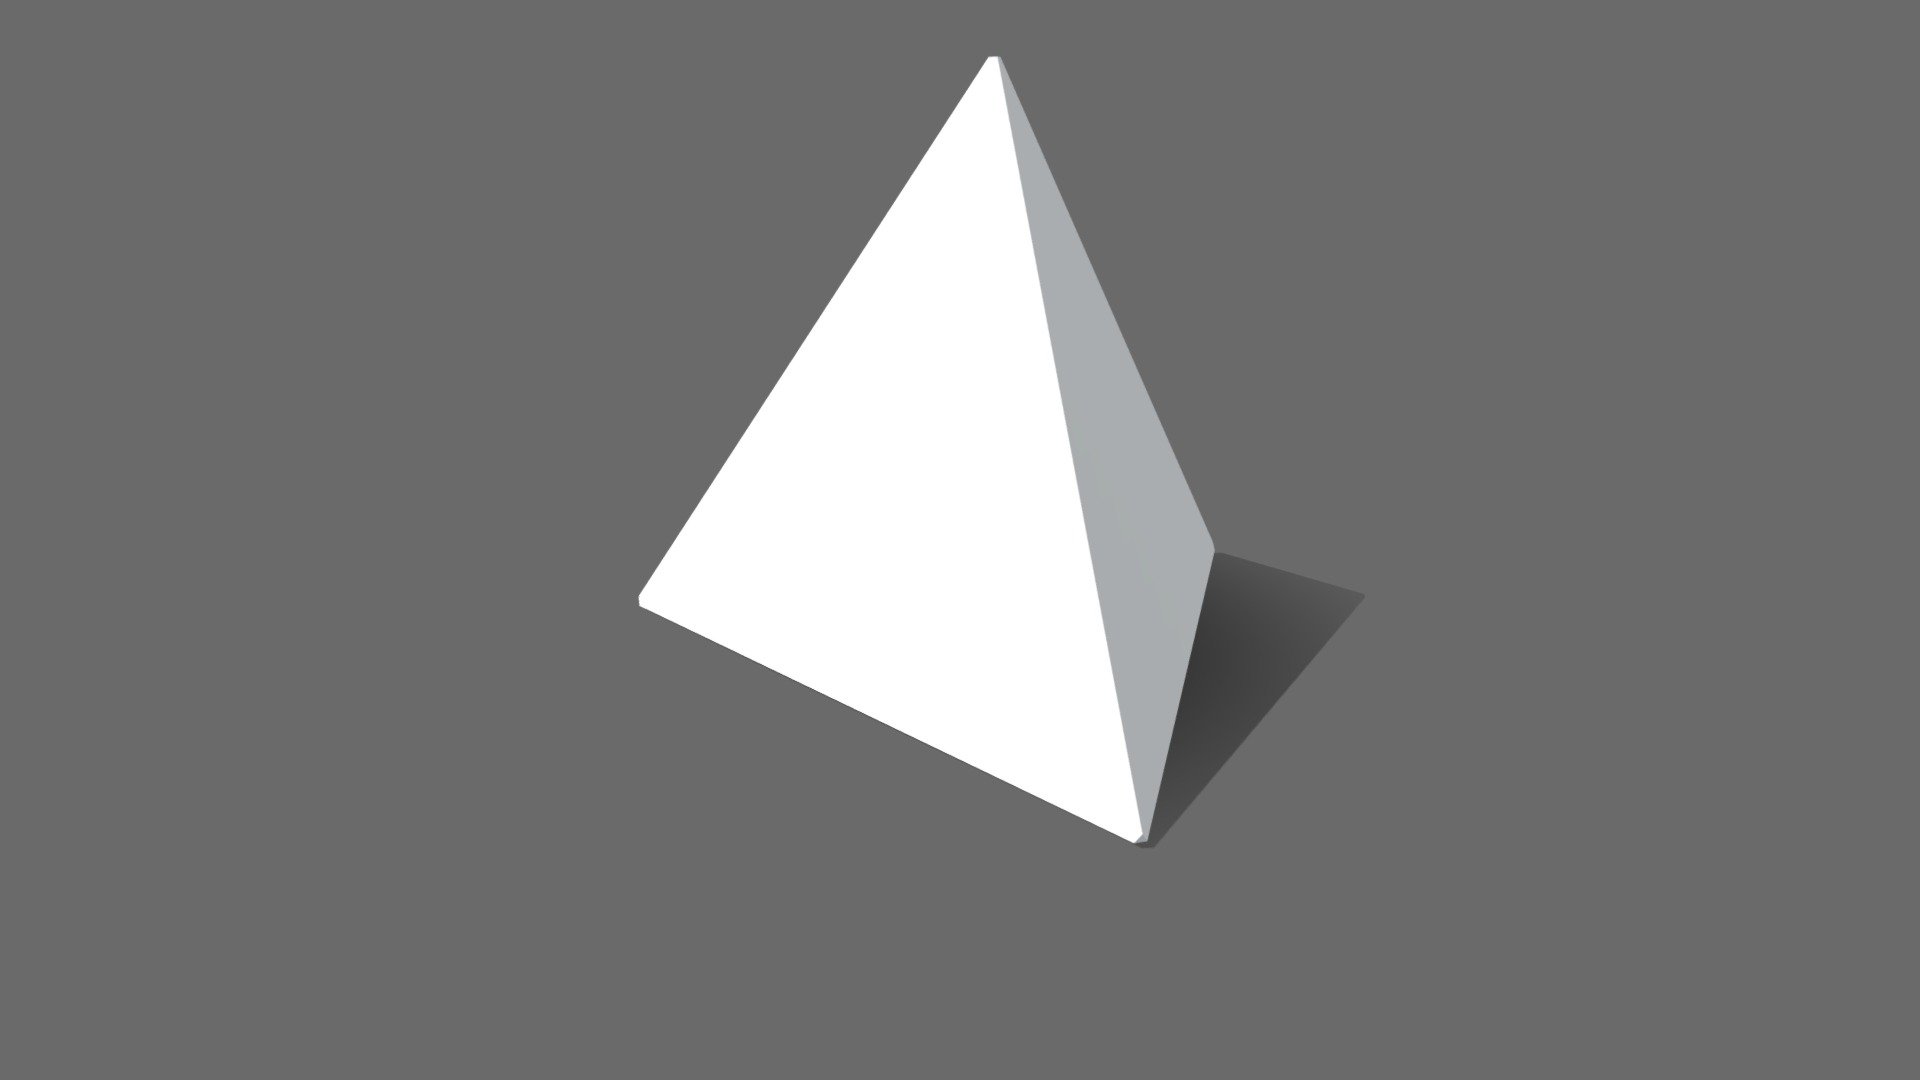 2" perfect Tetrahedron